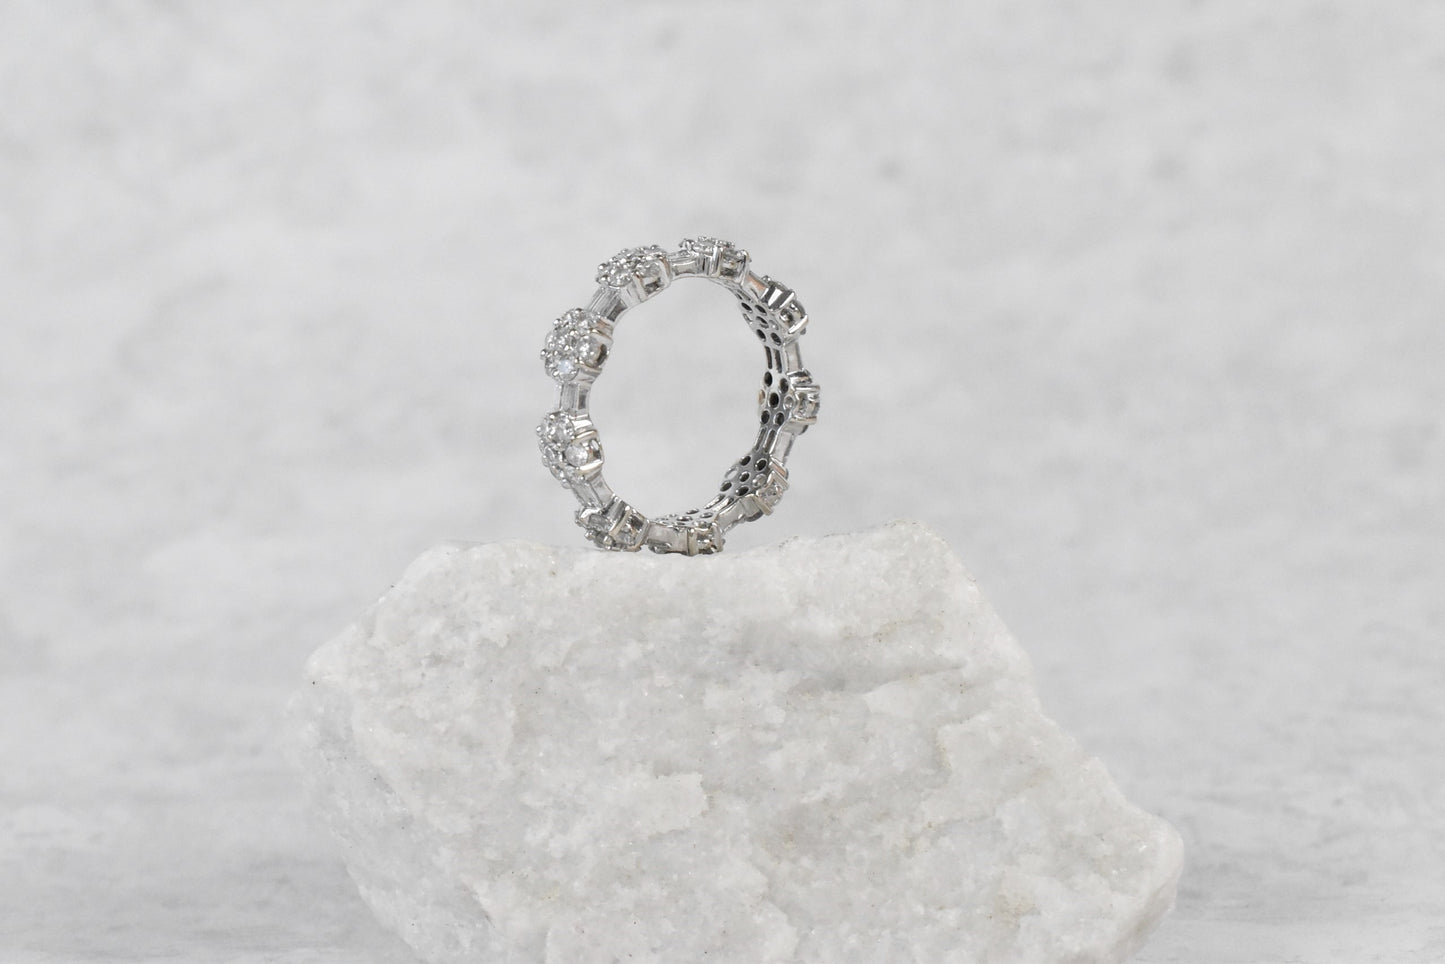 18k White Gold 2.16cttw Diamond Eternity Ring, Size 7 - 4.3g